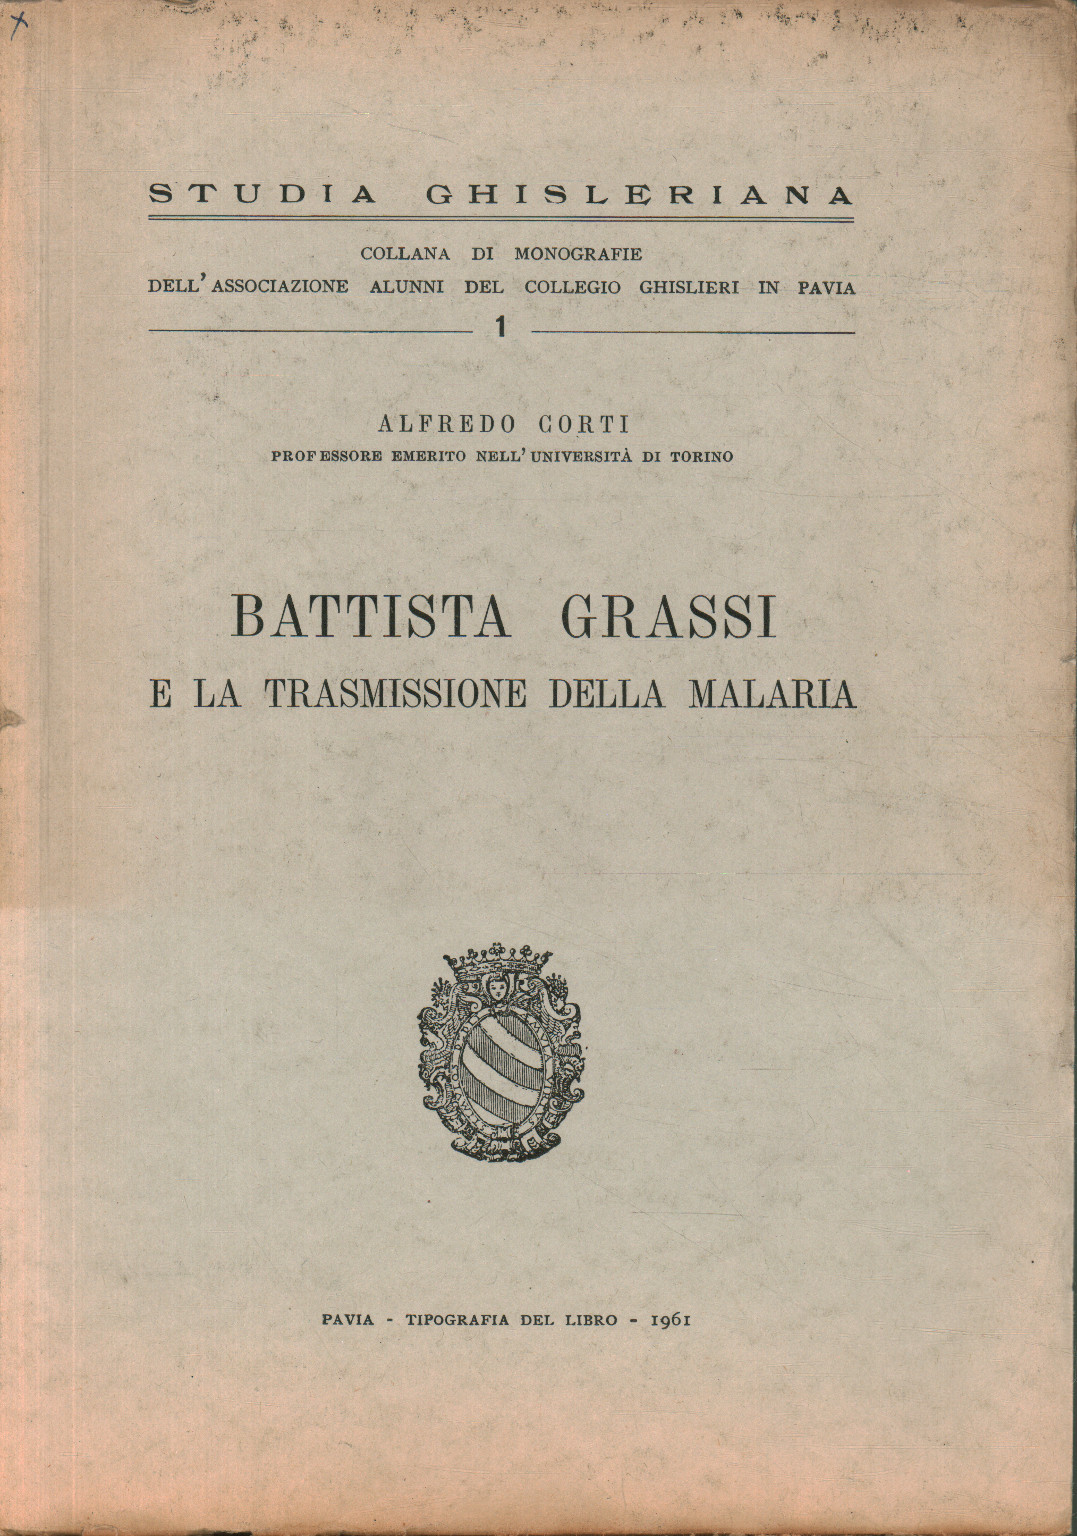 Battista Grassi and the transmission of%